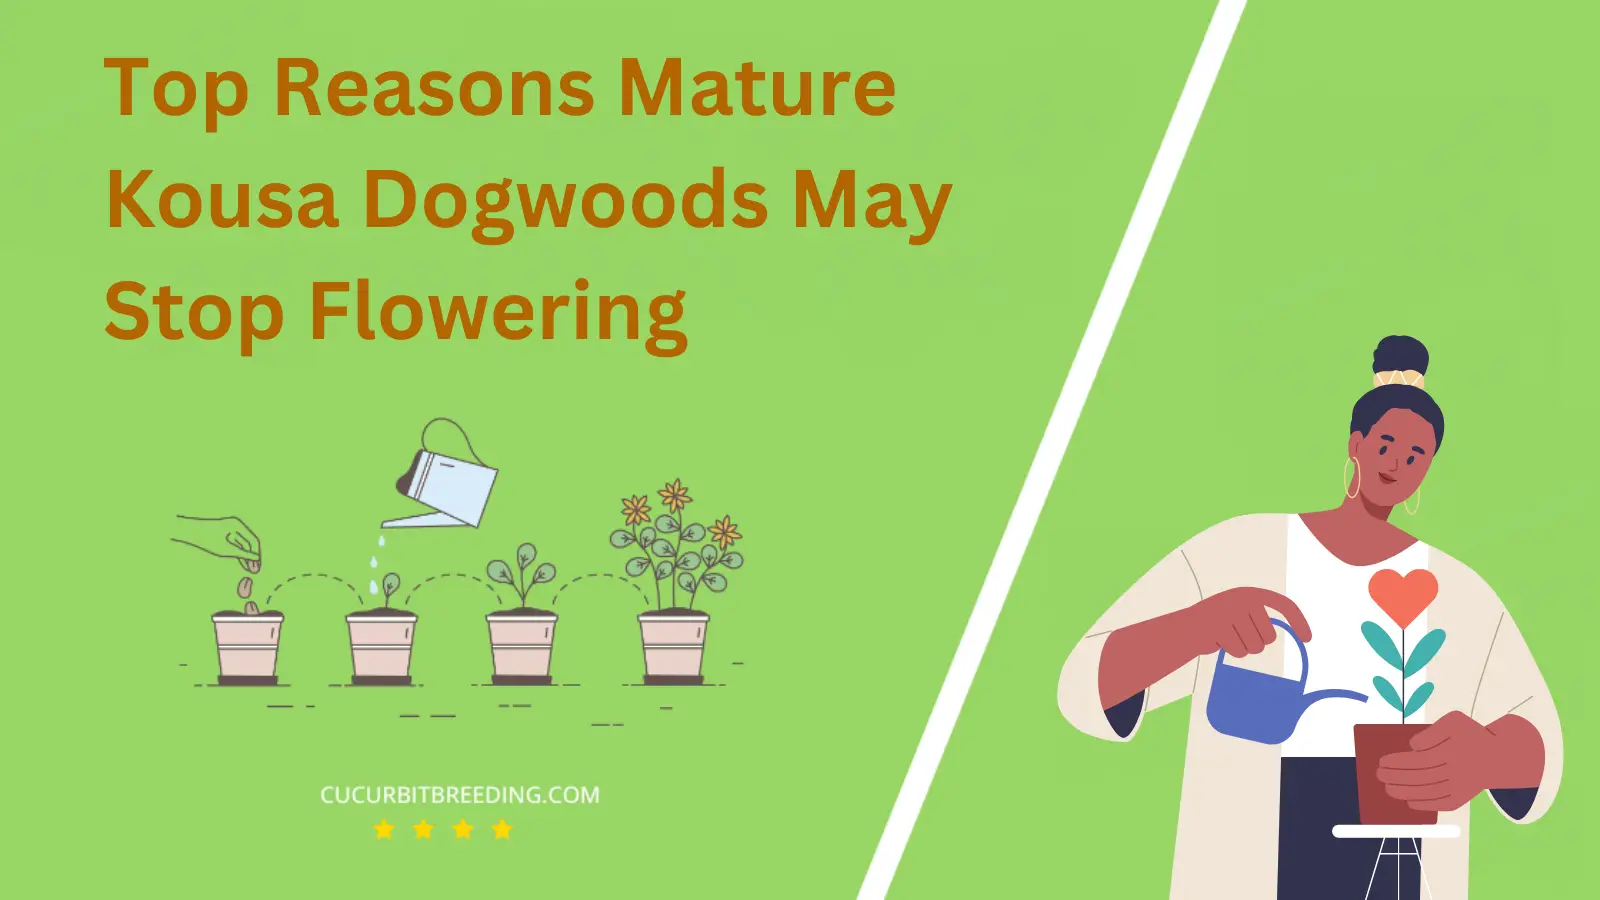 Top Reasons Mature Kousa Dogwoods May Stop Flowering